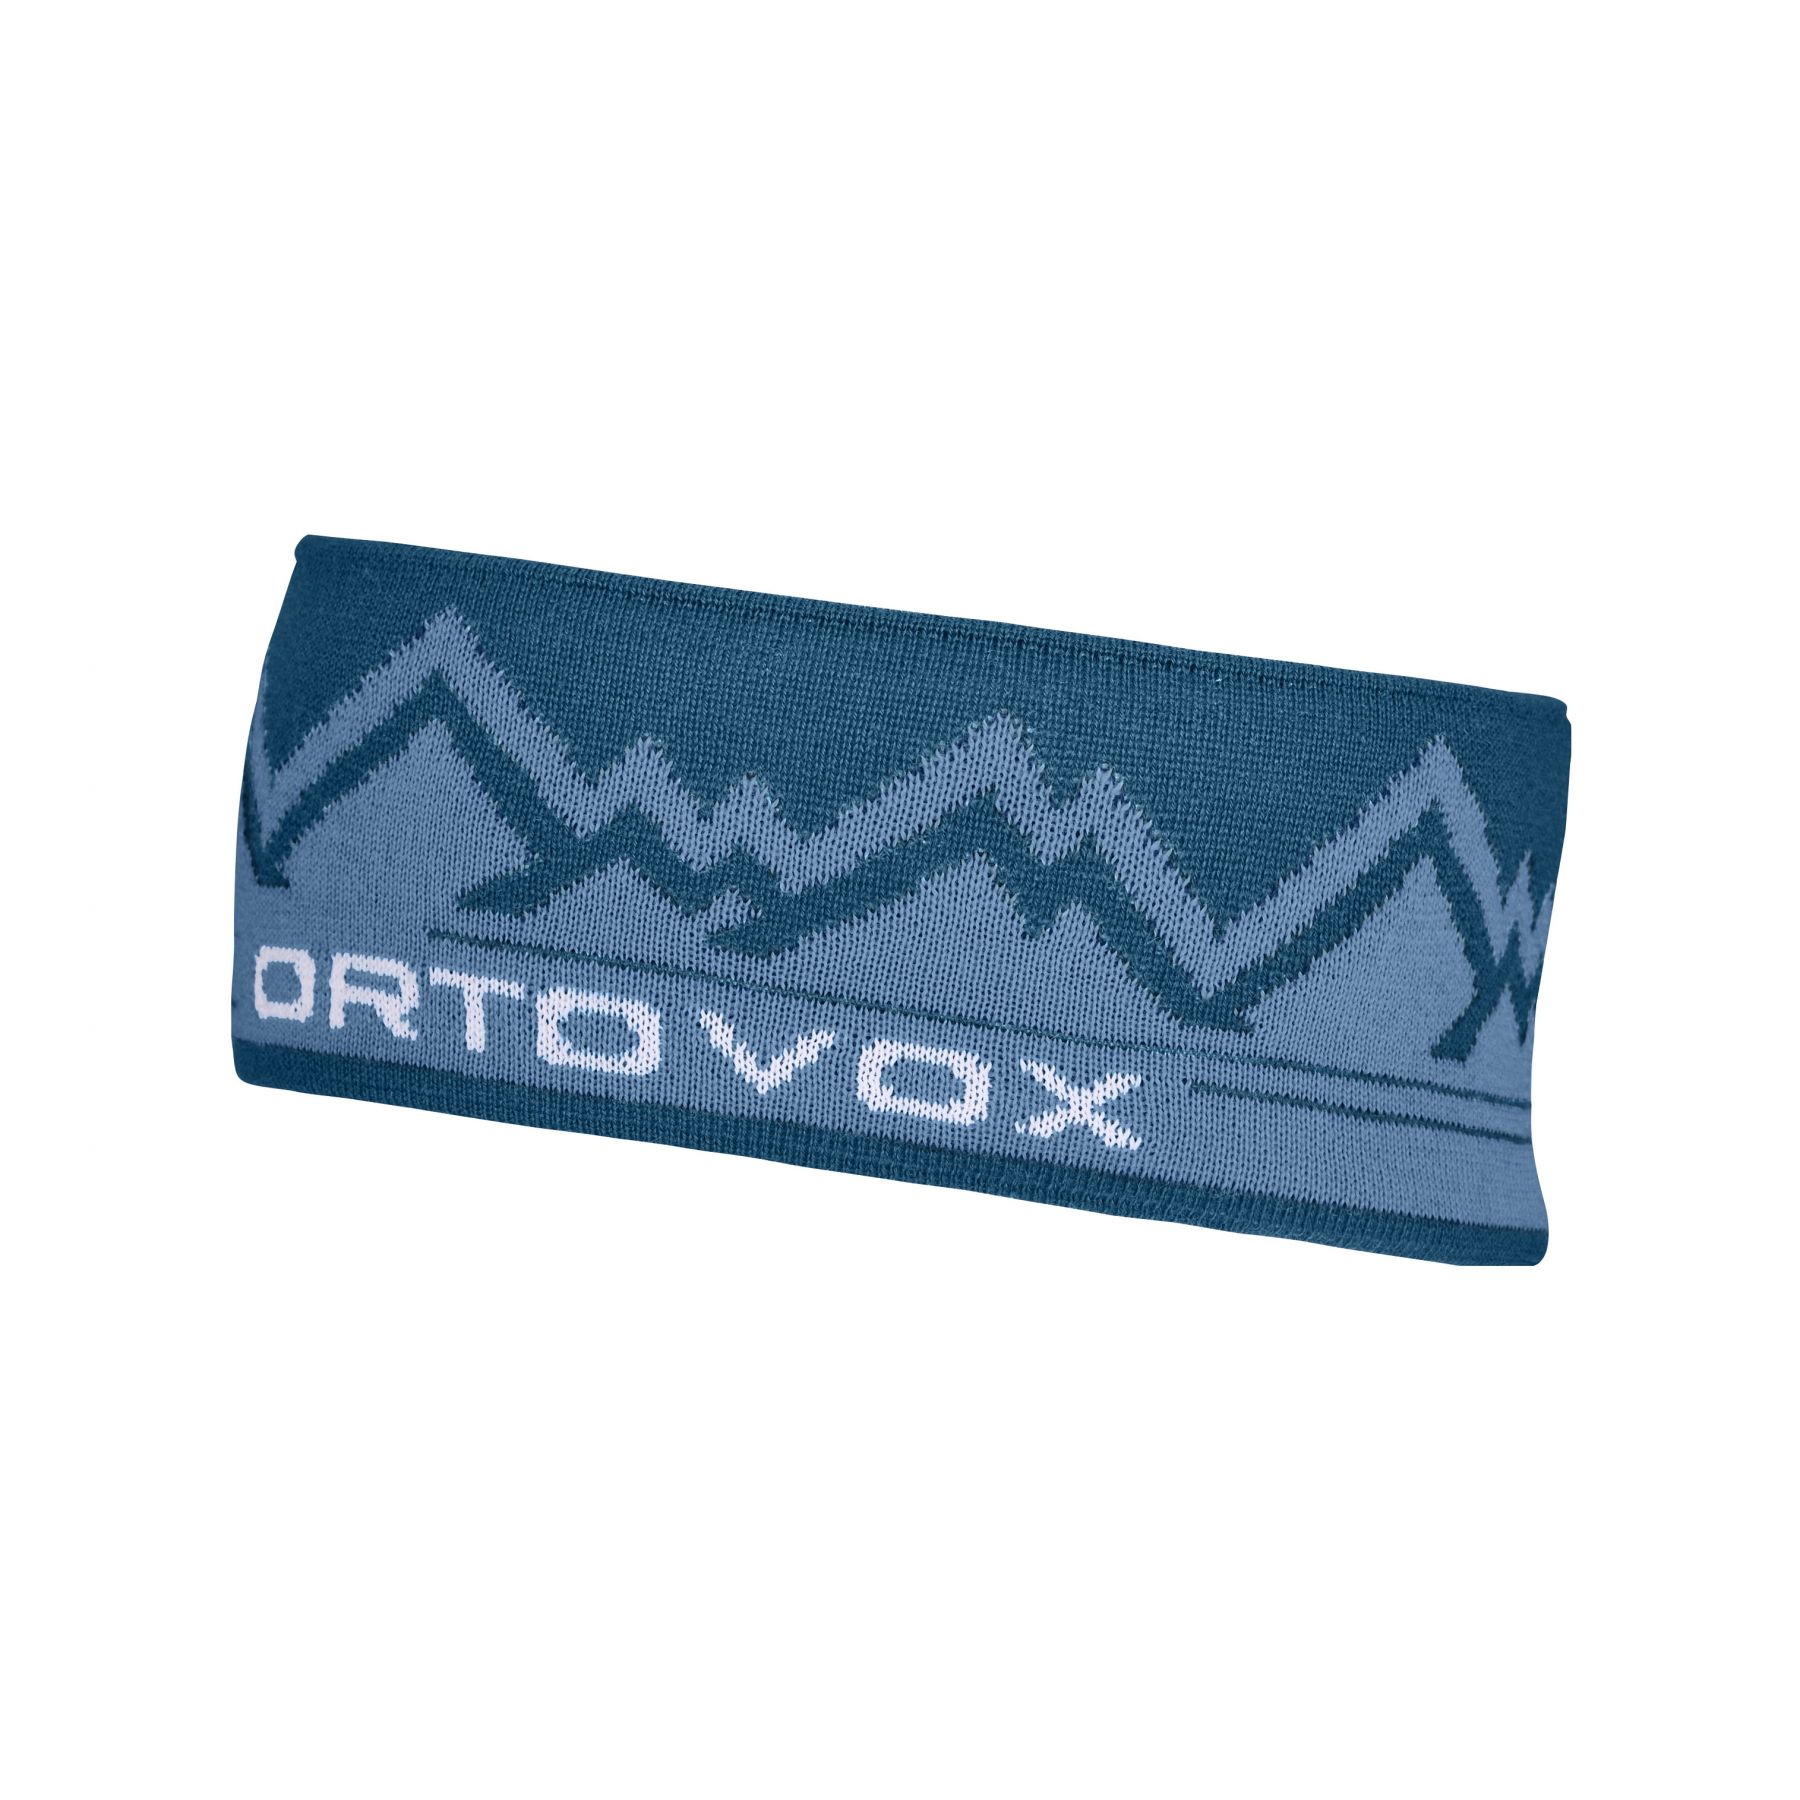 10: Ortovox Peak, pandebånd, blå